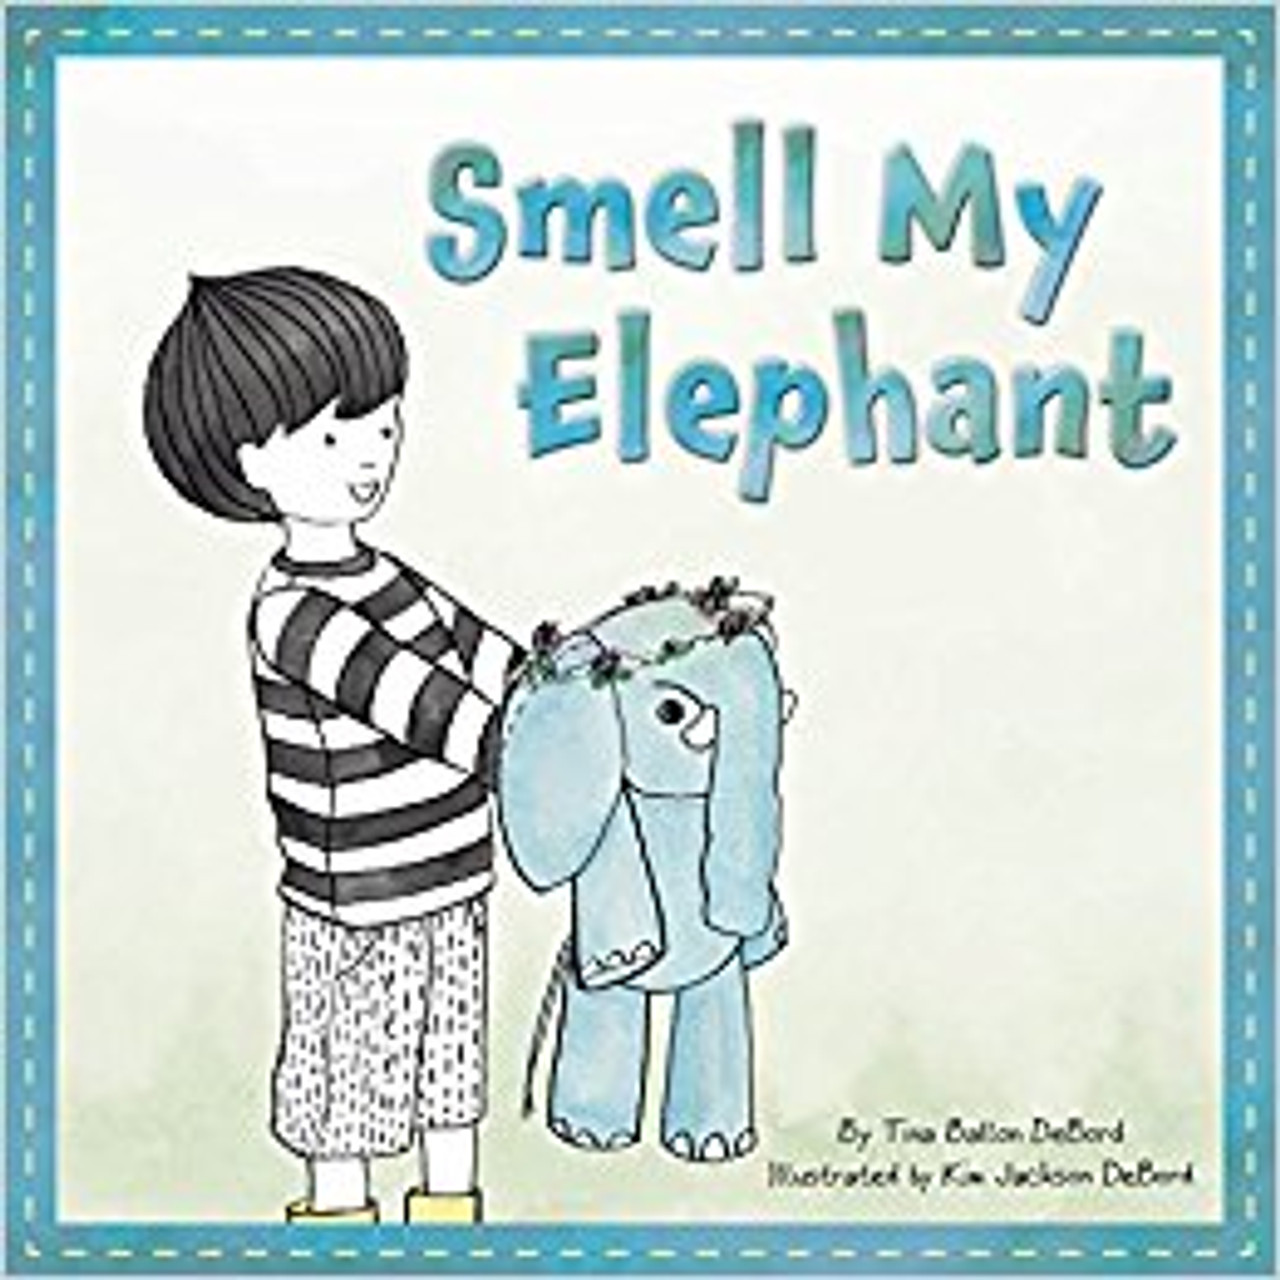 Smell My Elephant by Tina Ballon DeBord